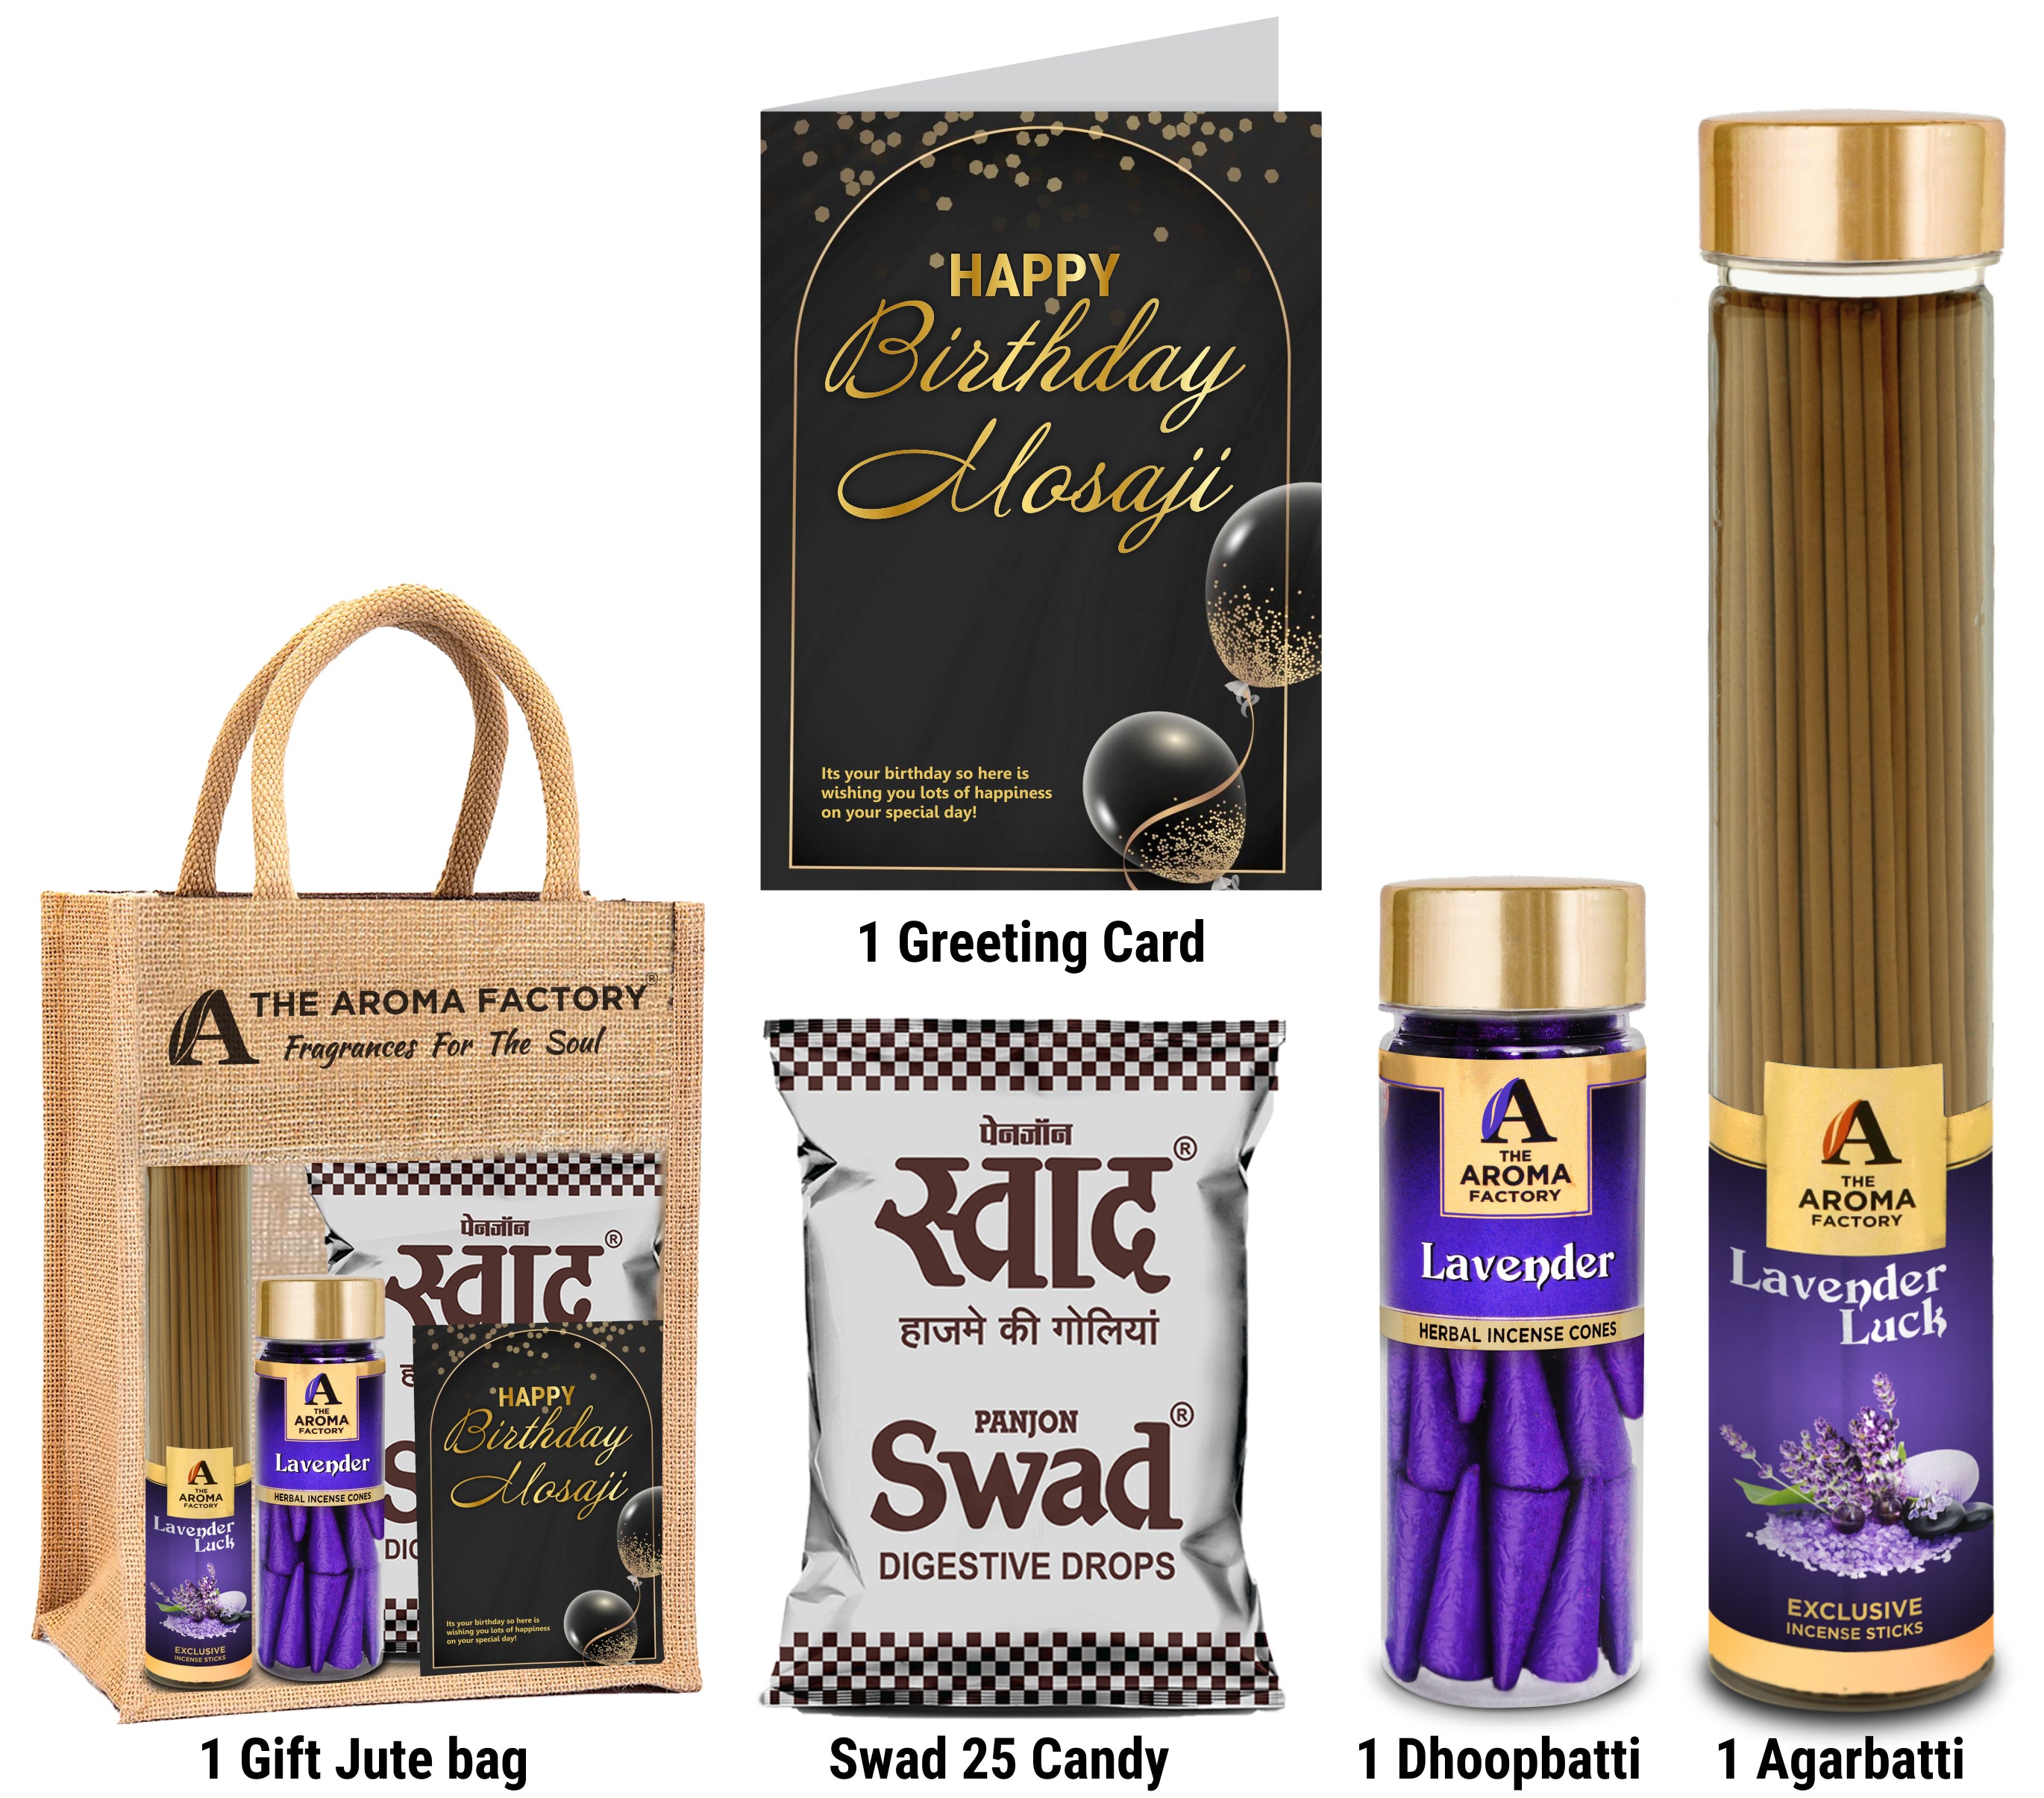 The Aroma Factory Happy Birthday Mosaji/Masaji Gift with Card (25 Swad Candy, Lavender Agarbatti Bottle, Lavender Cone) in Jute Bag